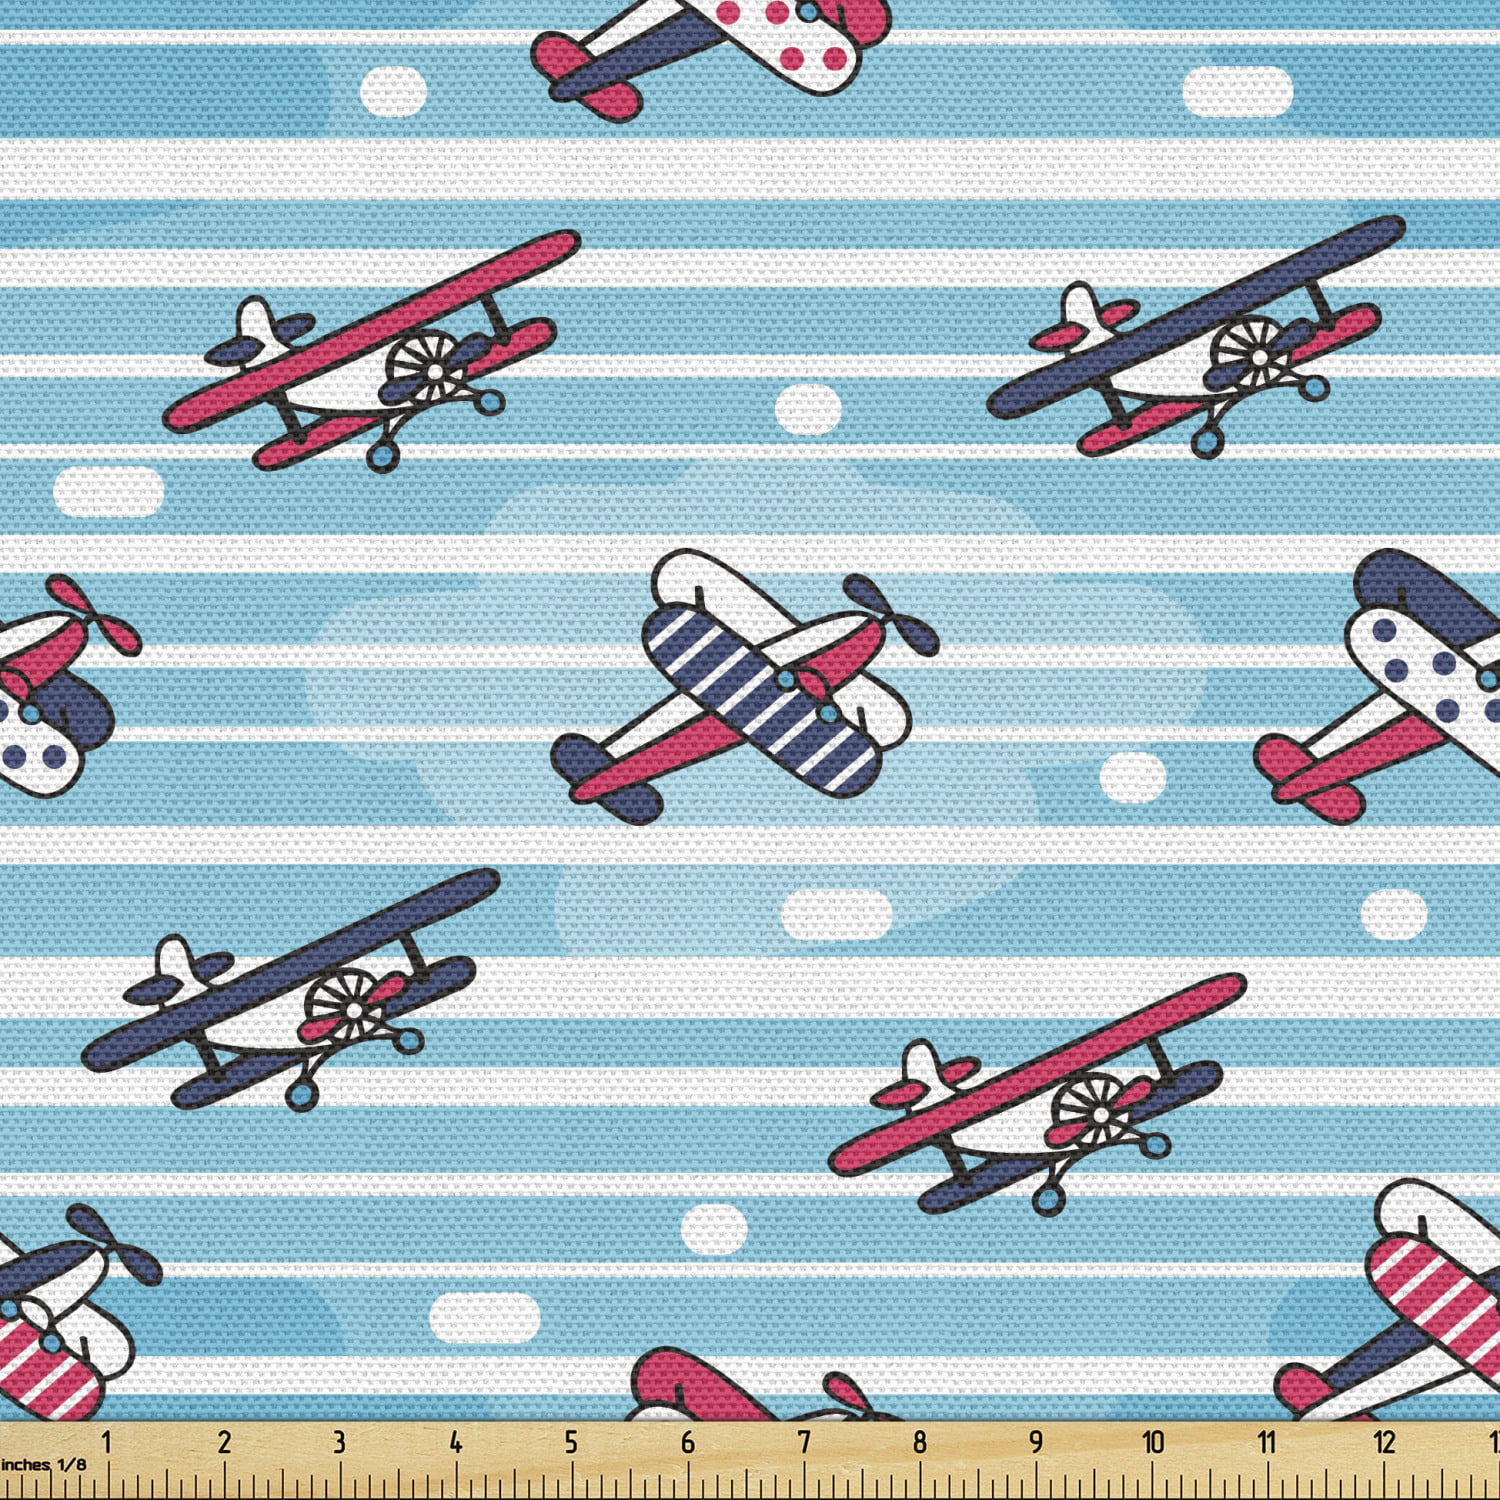 Nerd Geek Flight Flying Airplane Pilot Spoonflower Fabric by the Yard 